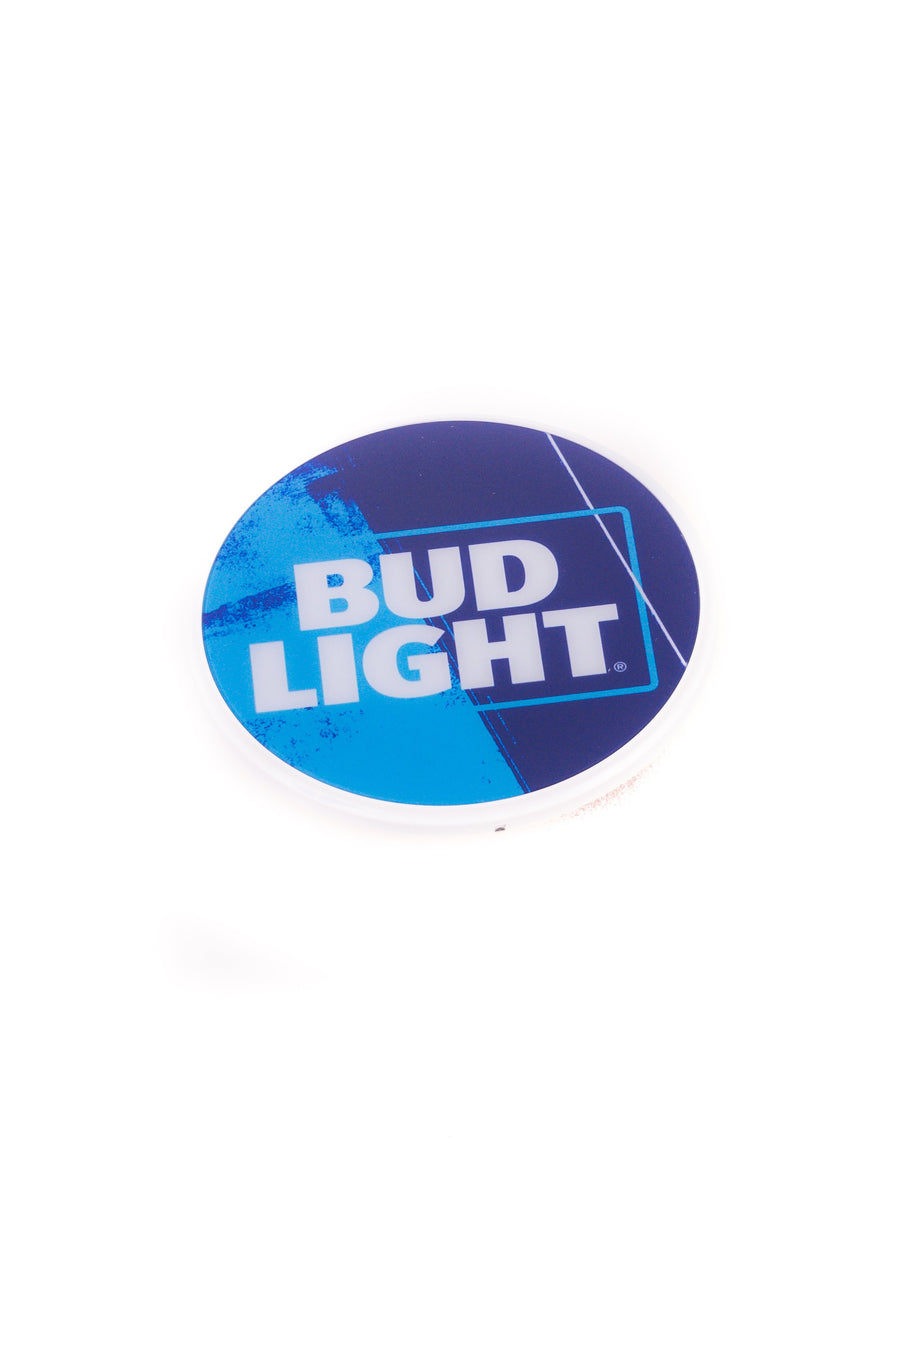 Bud Light / Budweiser Coaster Design QI Rapid Wireless Charging Pad